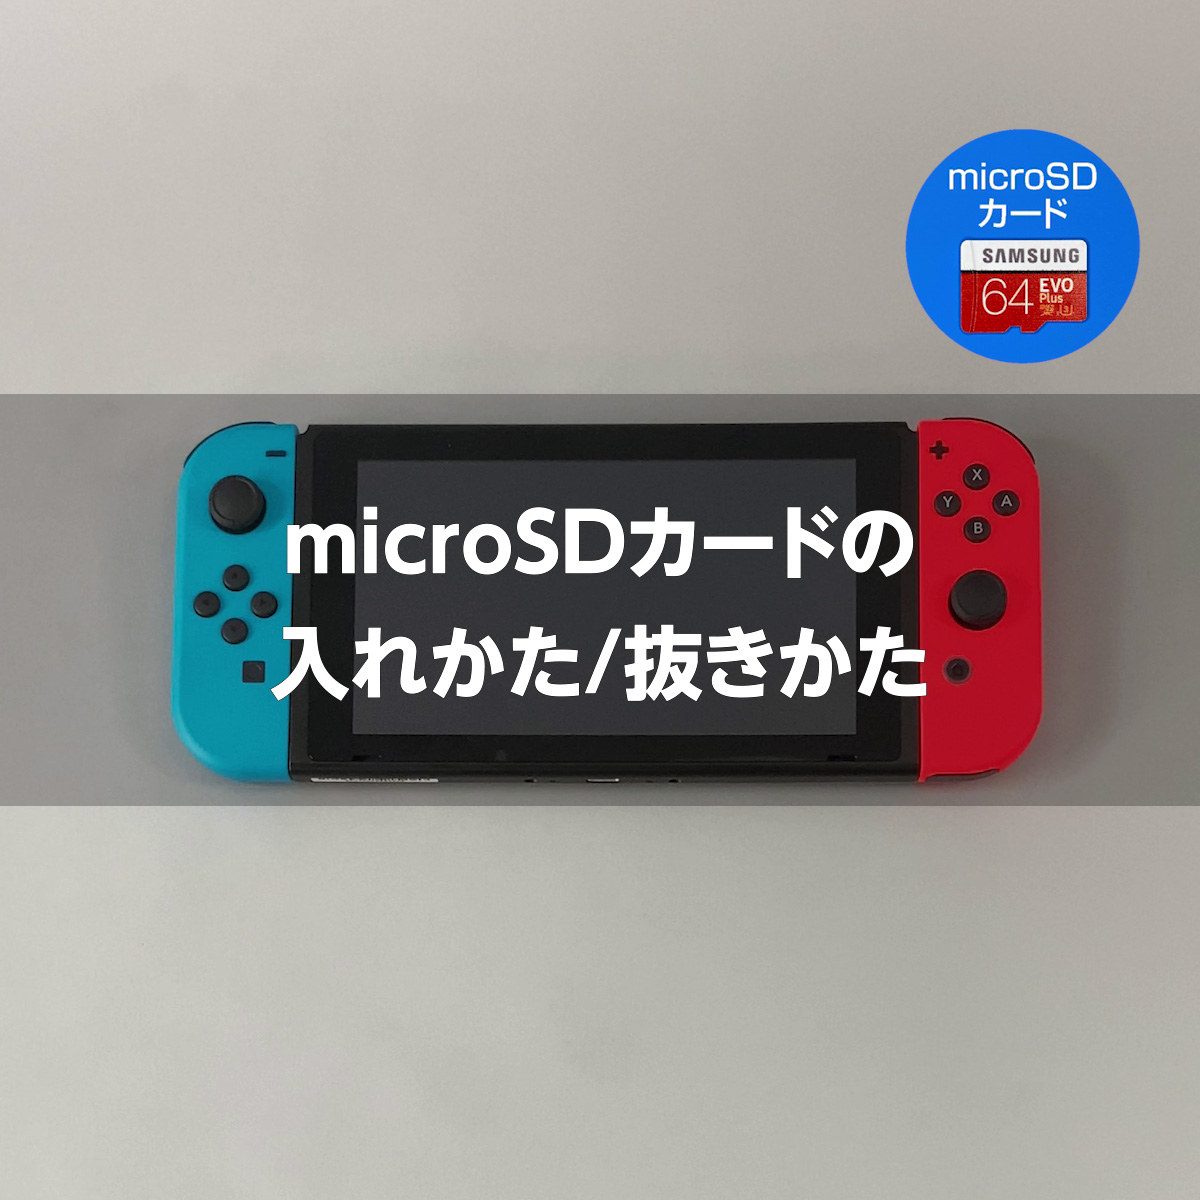 microSDカードについて｜Nintendo Switch サポート情報｜Nintendo